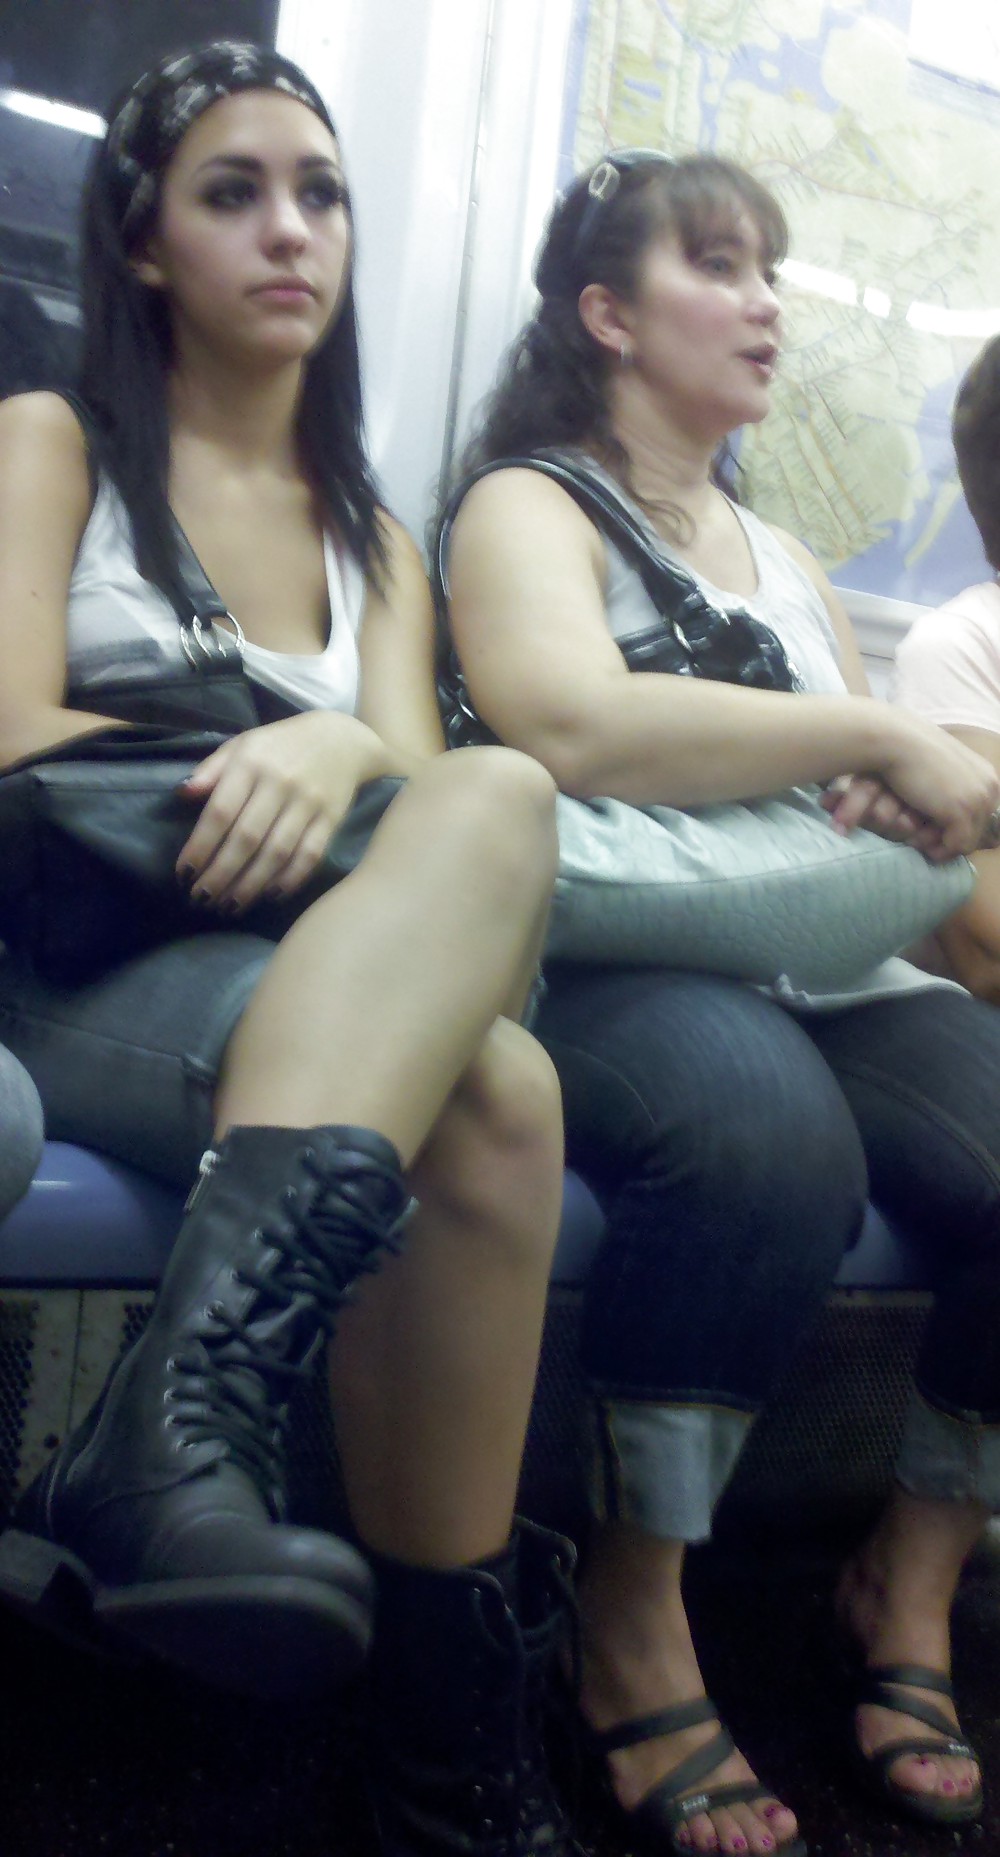 New York Subway Girls 26 adult photos